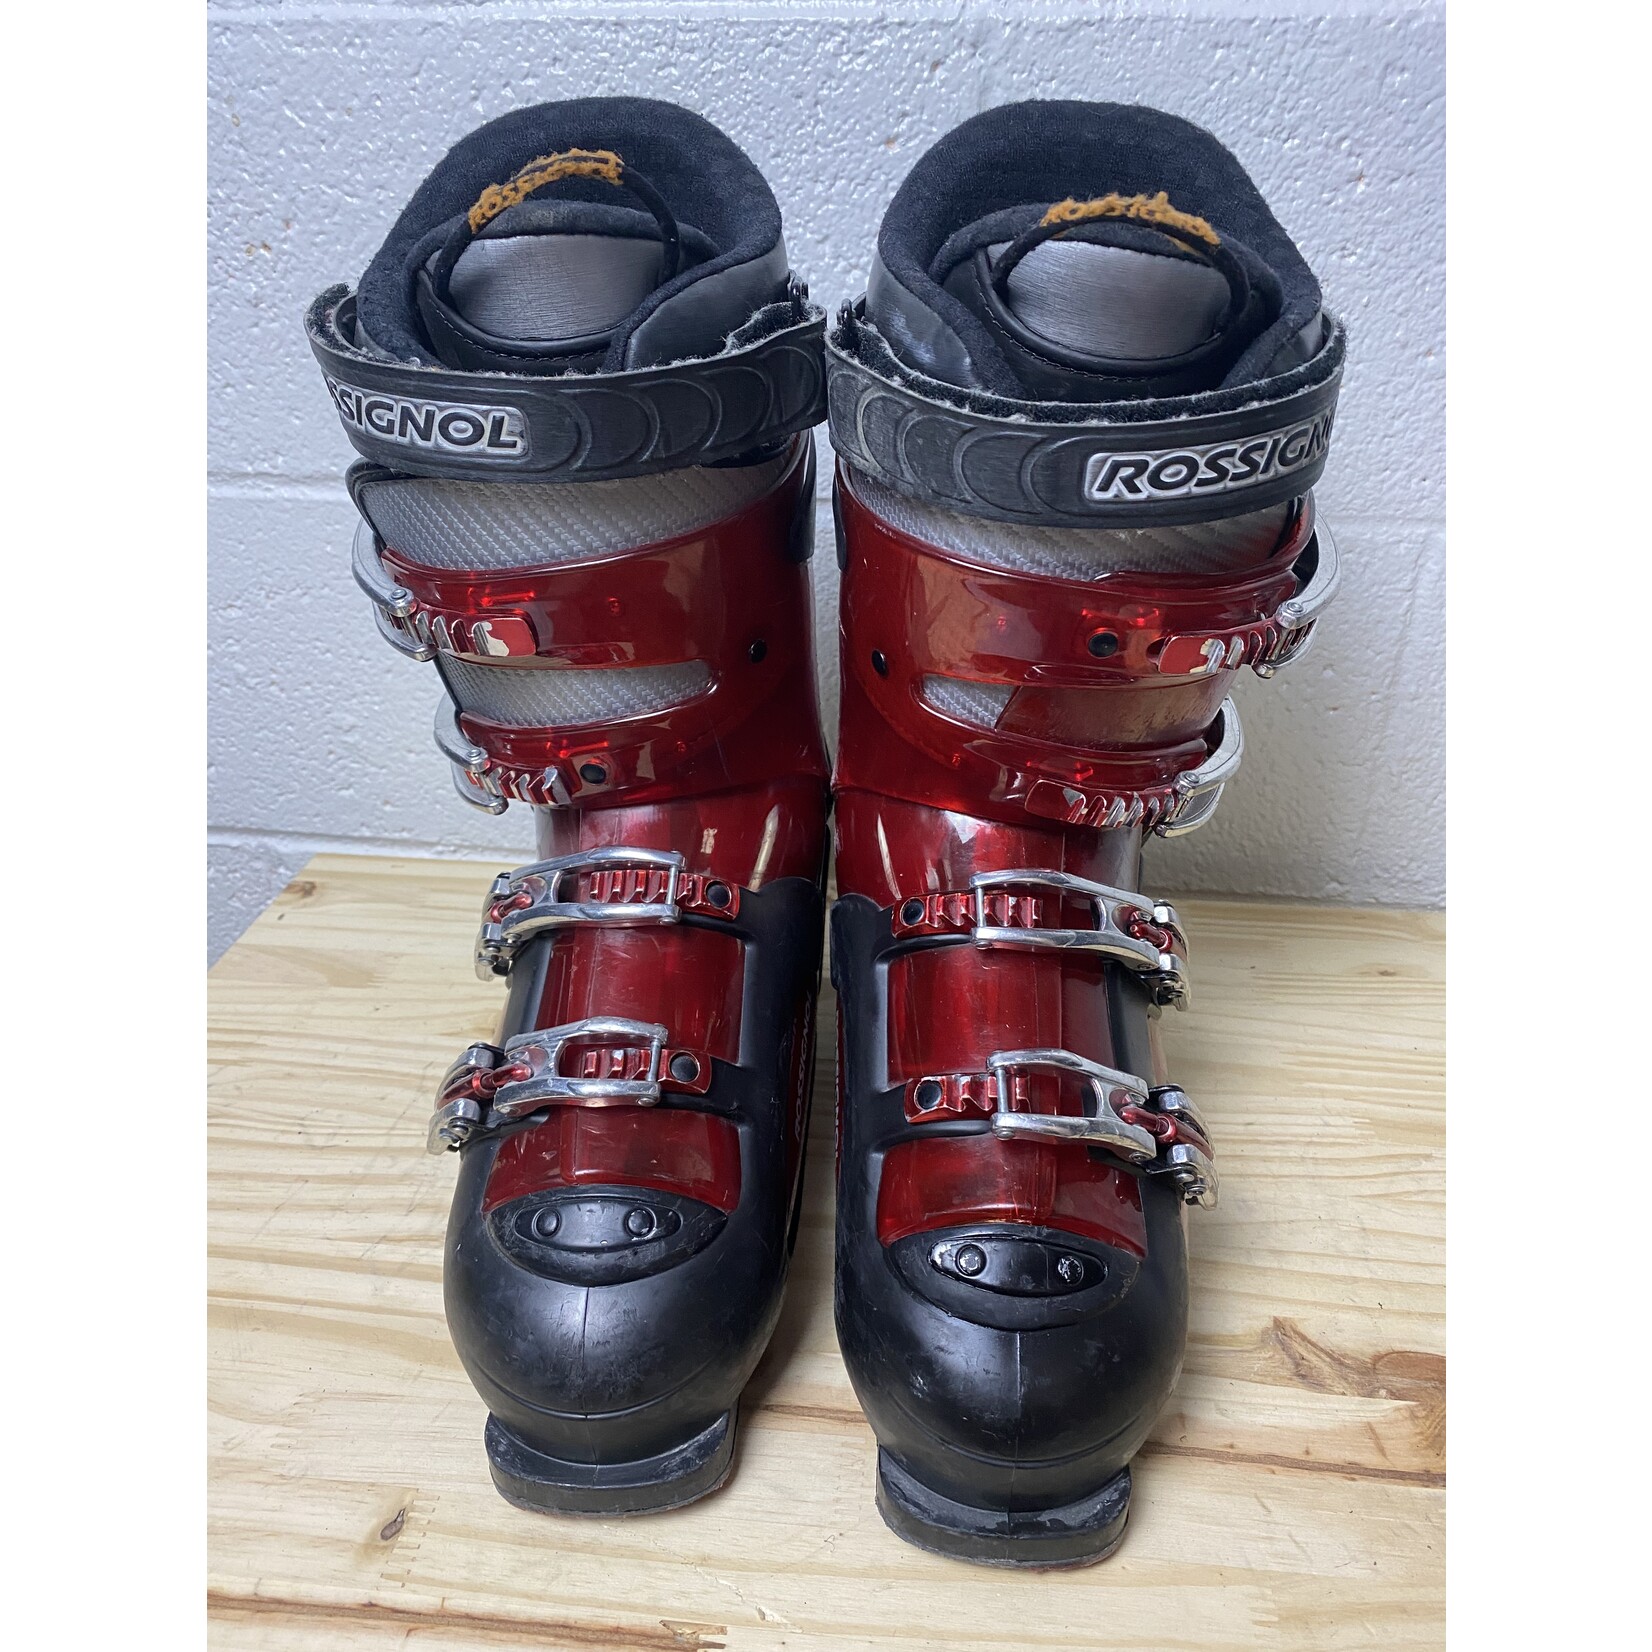 Rossignol Rossignol Open X1S Ski Boots